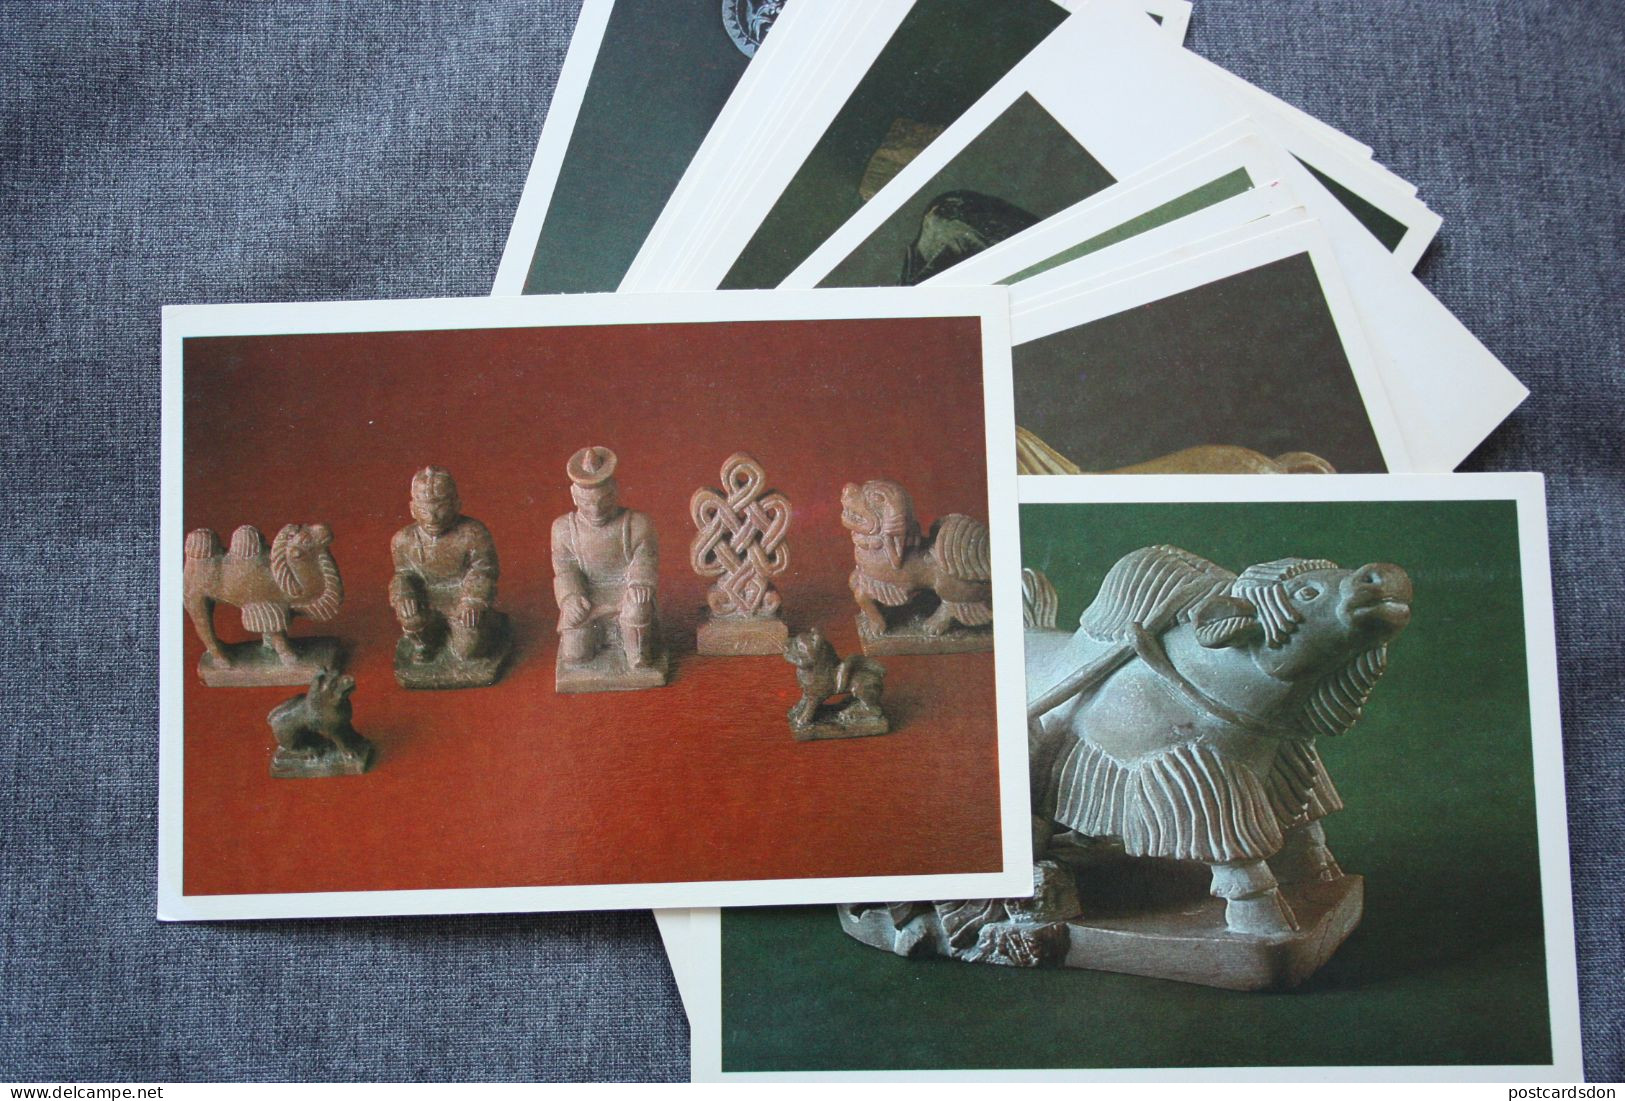 JEU - ECHECS - CHESS - ECHECS -   Chess Figures Made By Tyva Masters - Old Postcard 1984 From Soviet Set - Chess